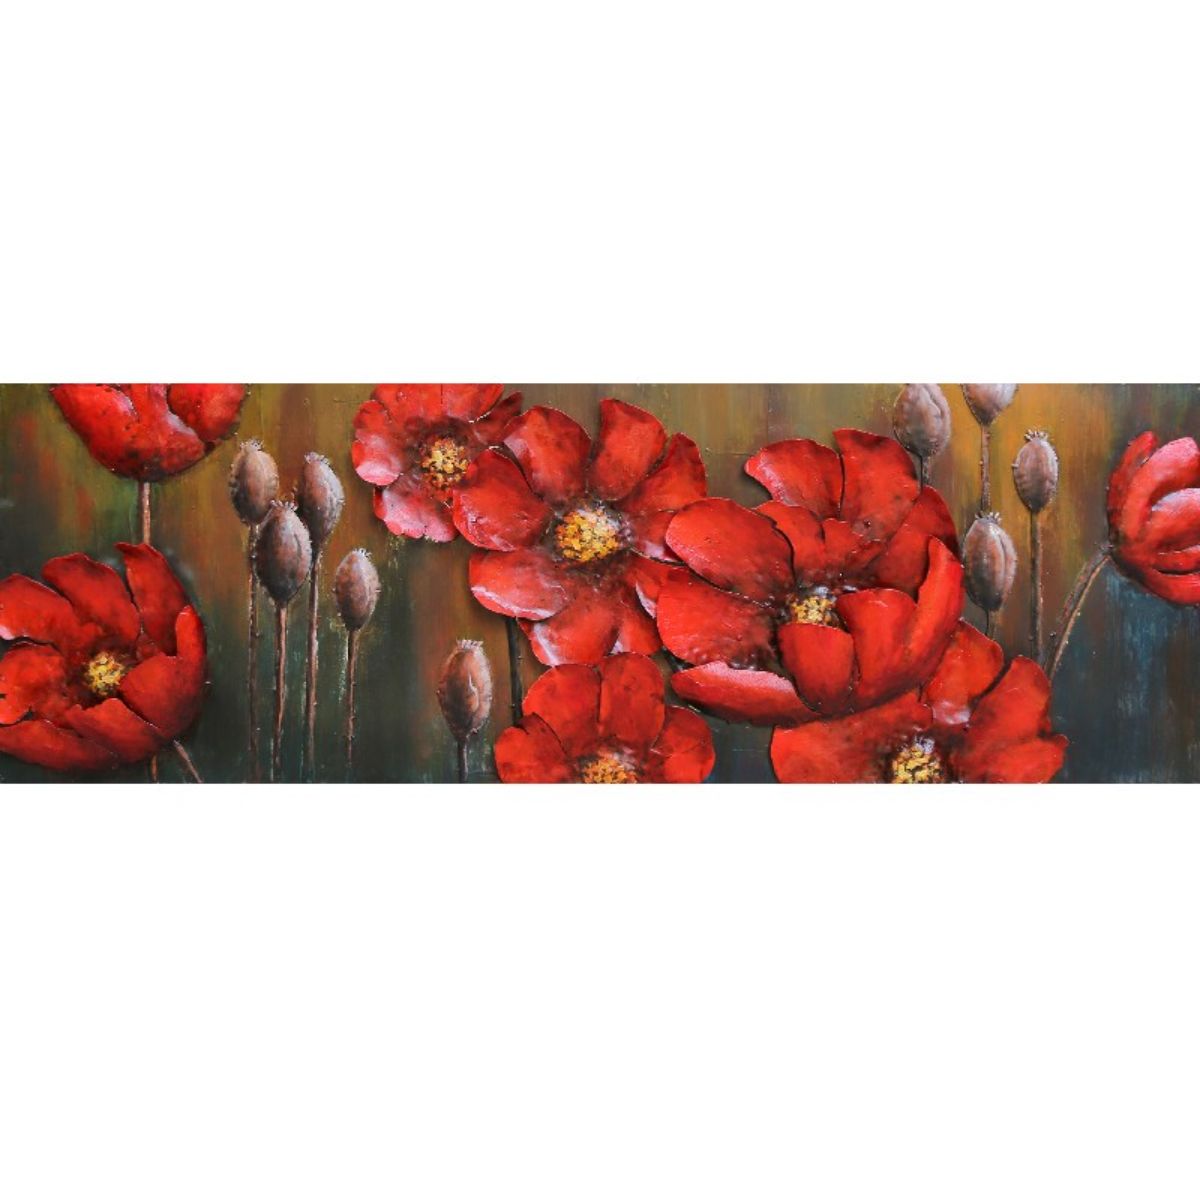 Tablouri - Tablou de metal 3D, model cu flori rosii, 50x150x6 cm, hectarul.ro